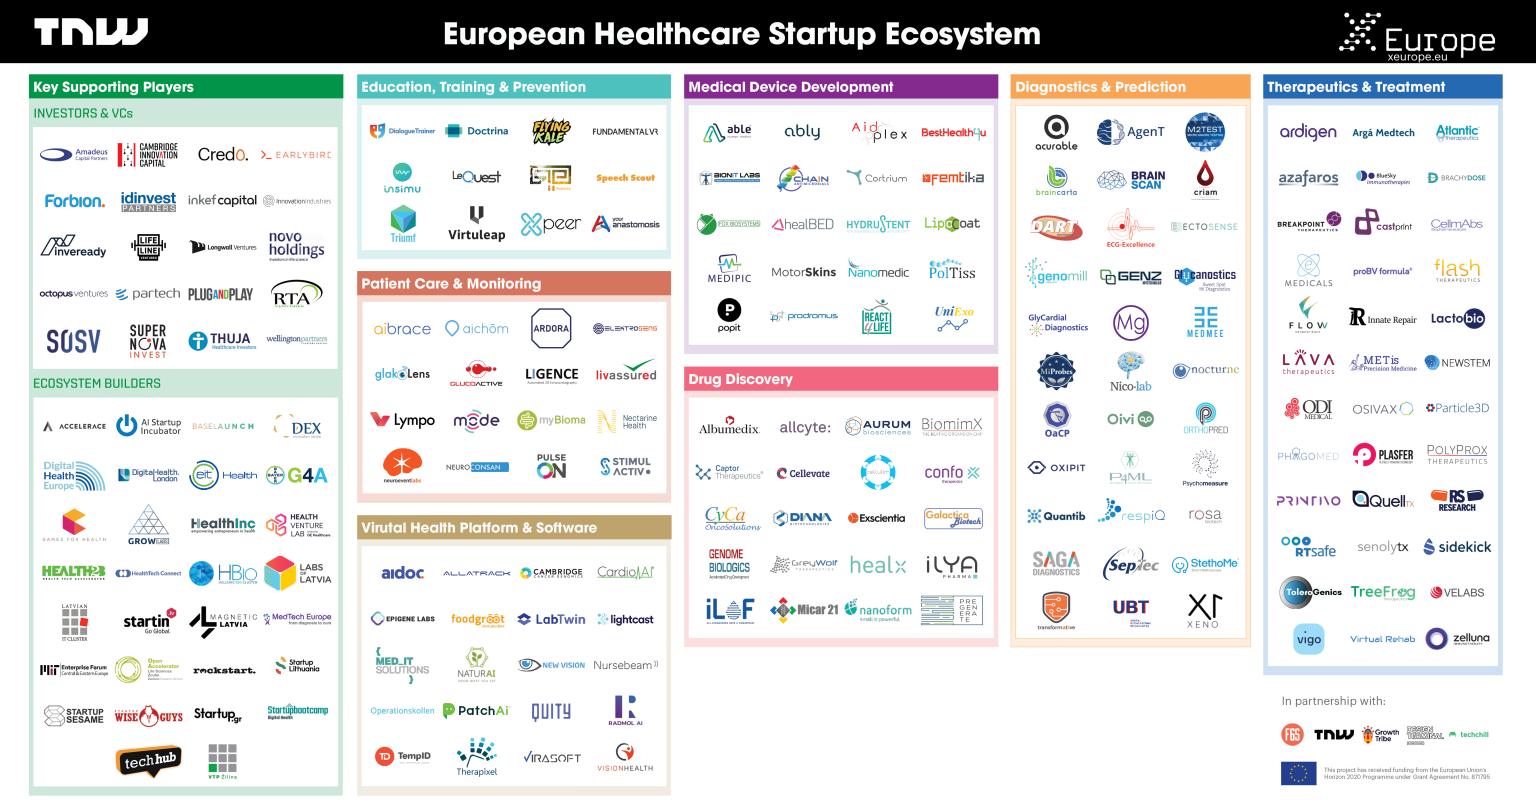 Micar Innovation (Micar21) part of European Healthcare Startup Ecosystem